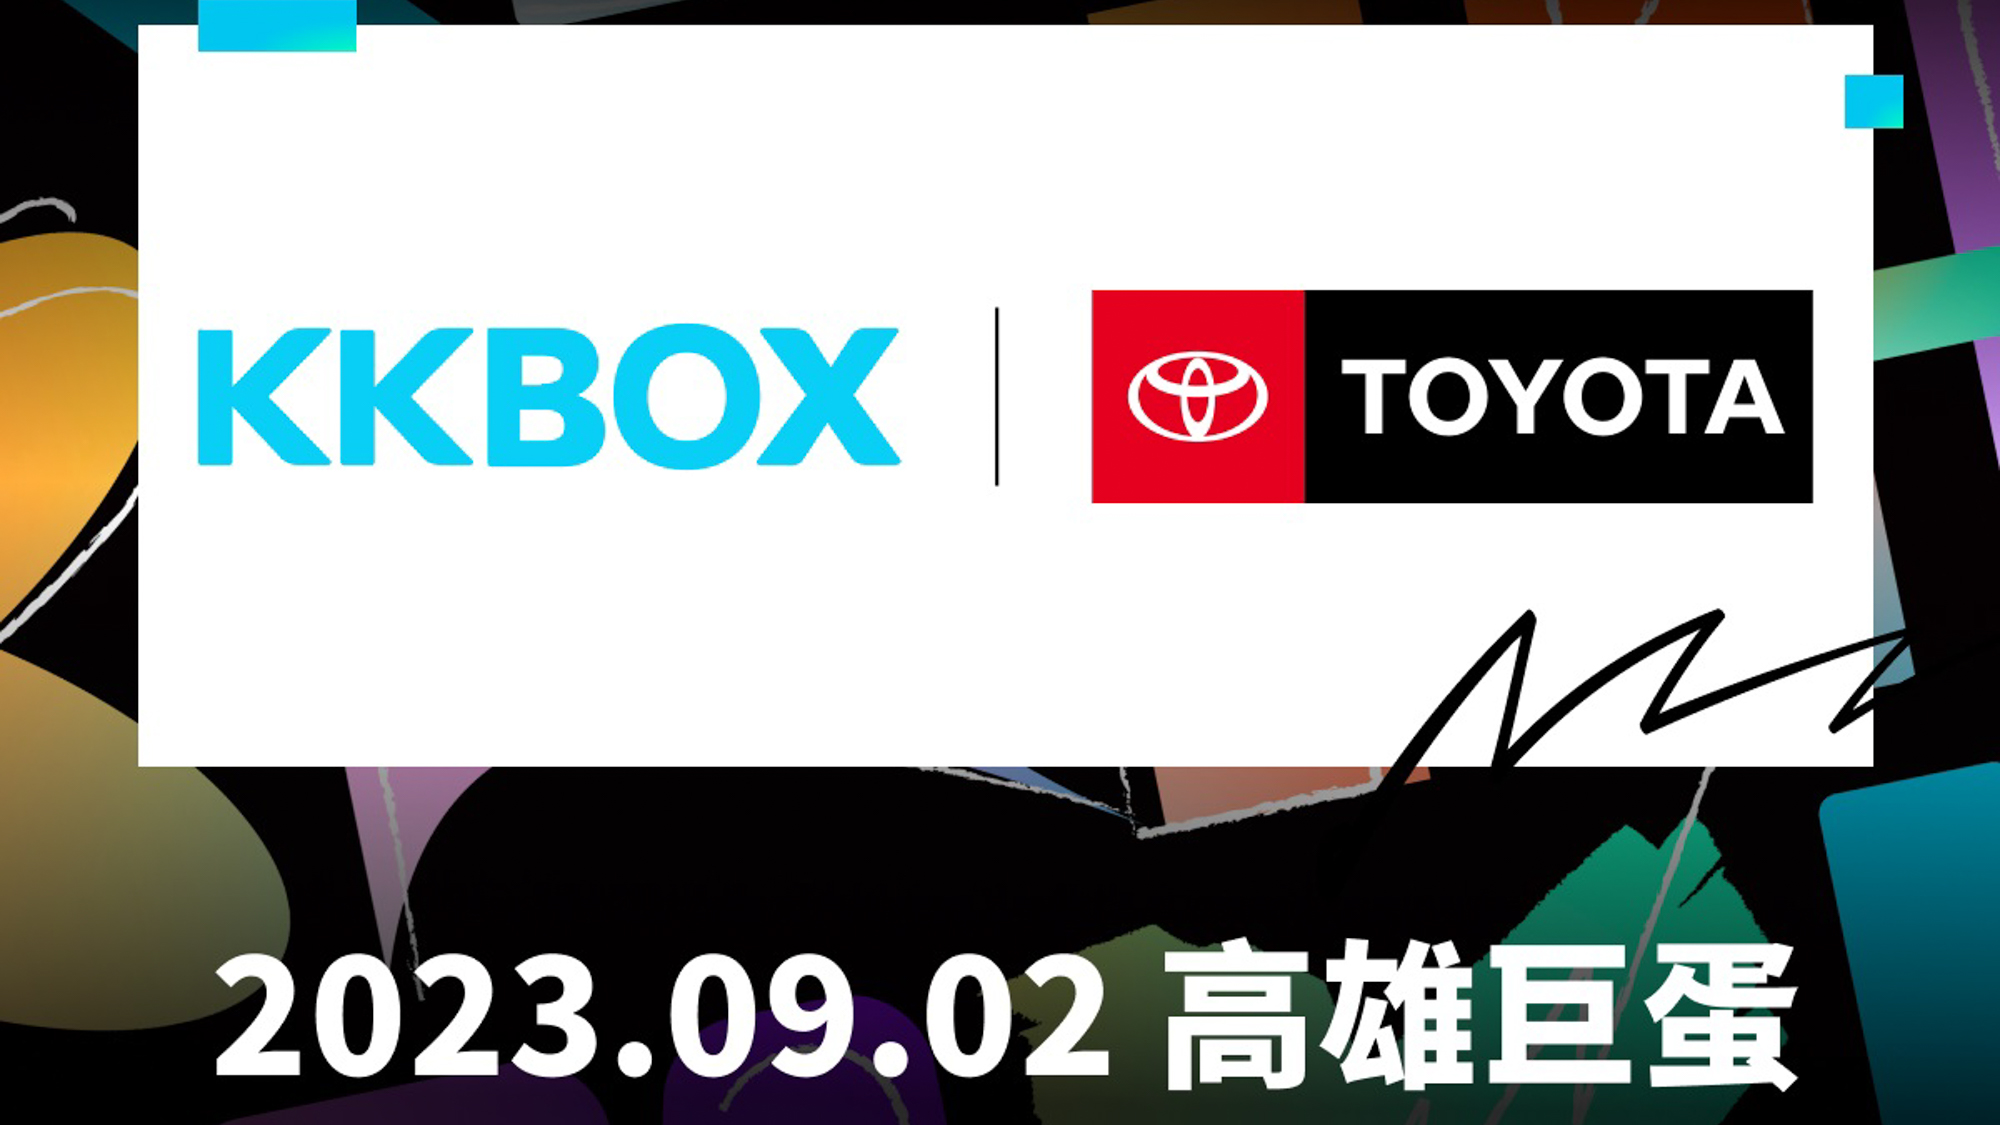 ▲ TOYOTA x KKBOX 風雲榜！支持台灣流行音樂，獻給樂迷們的成年禮！